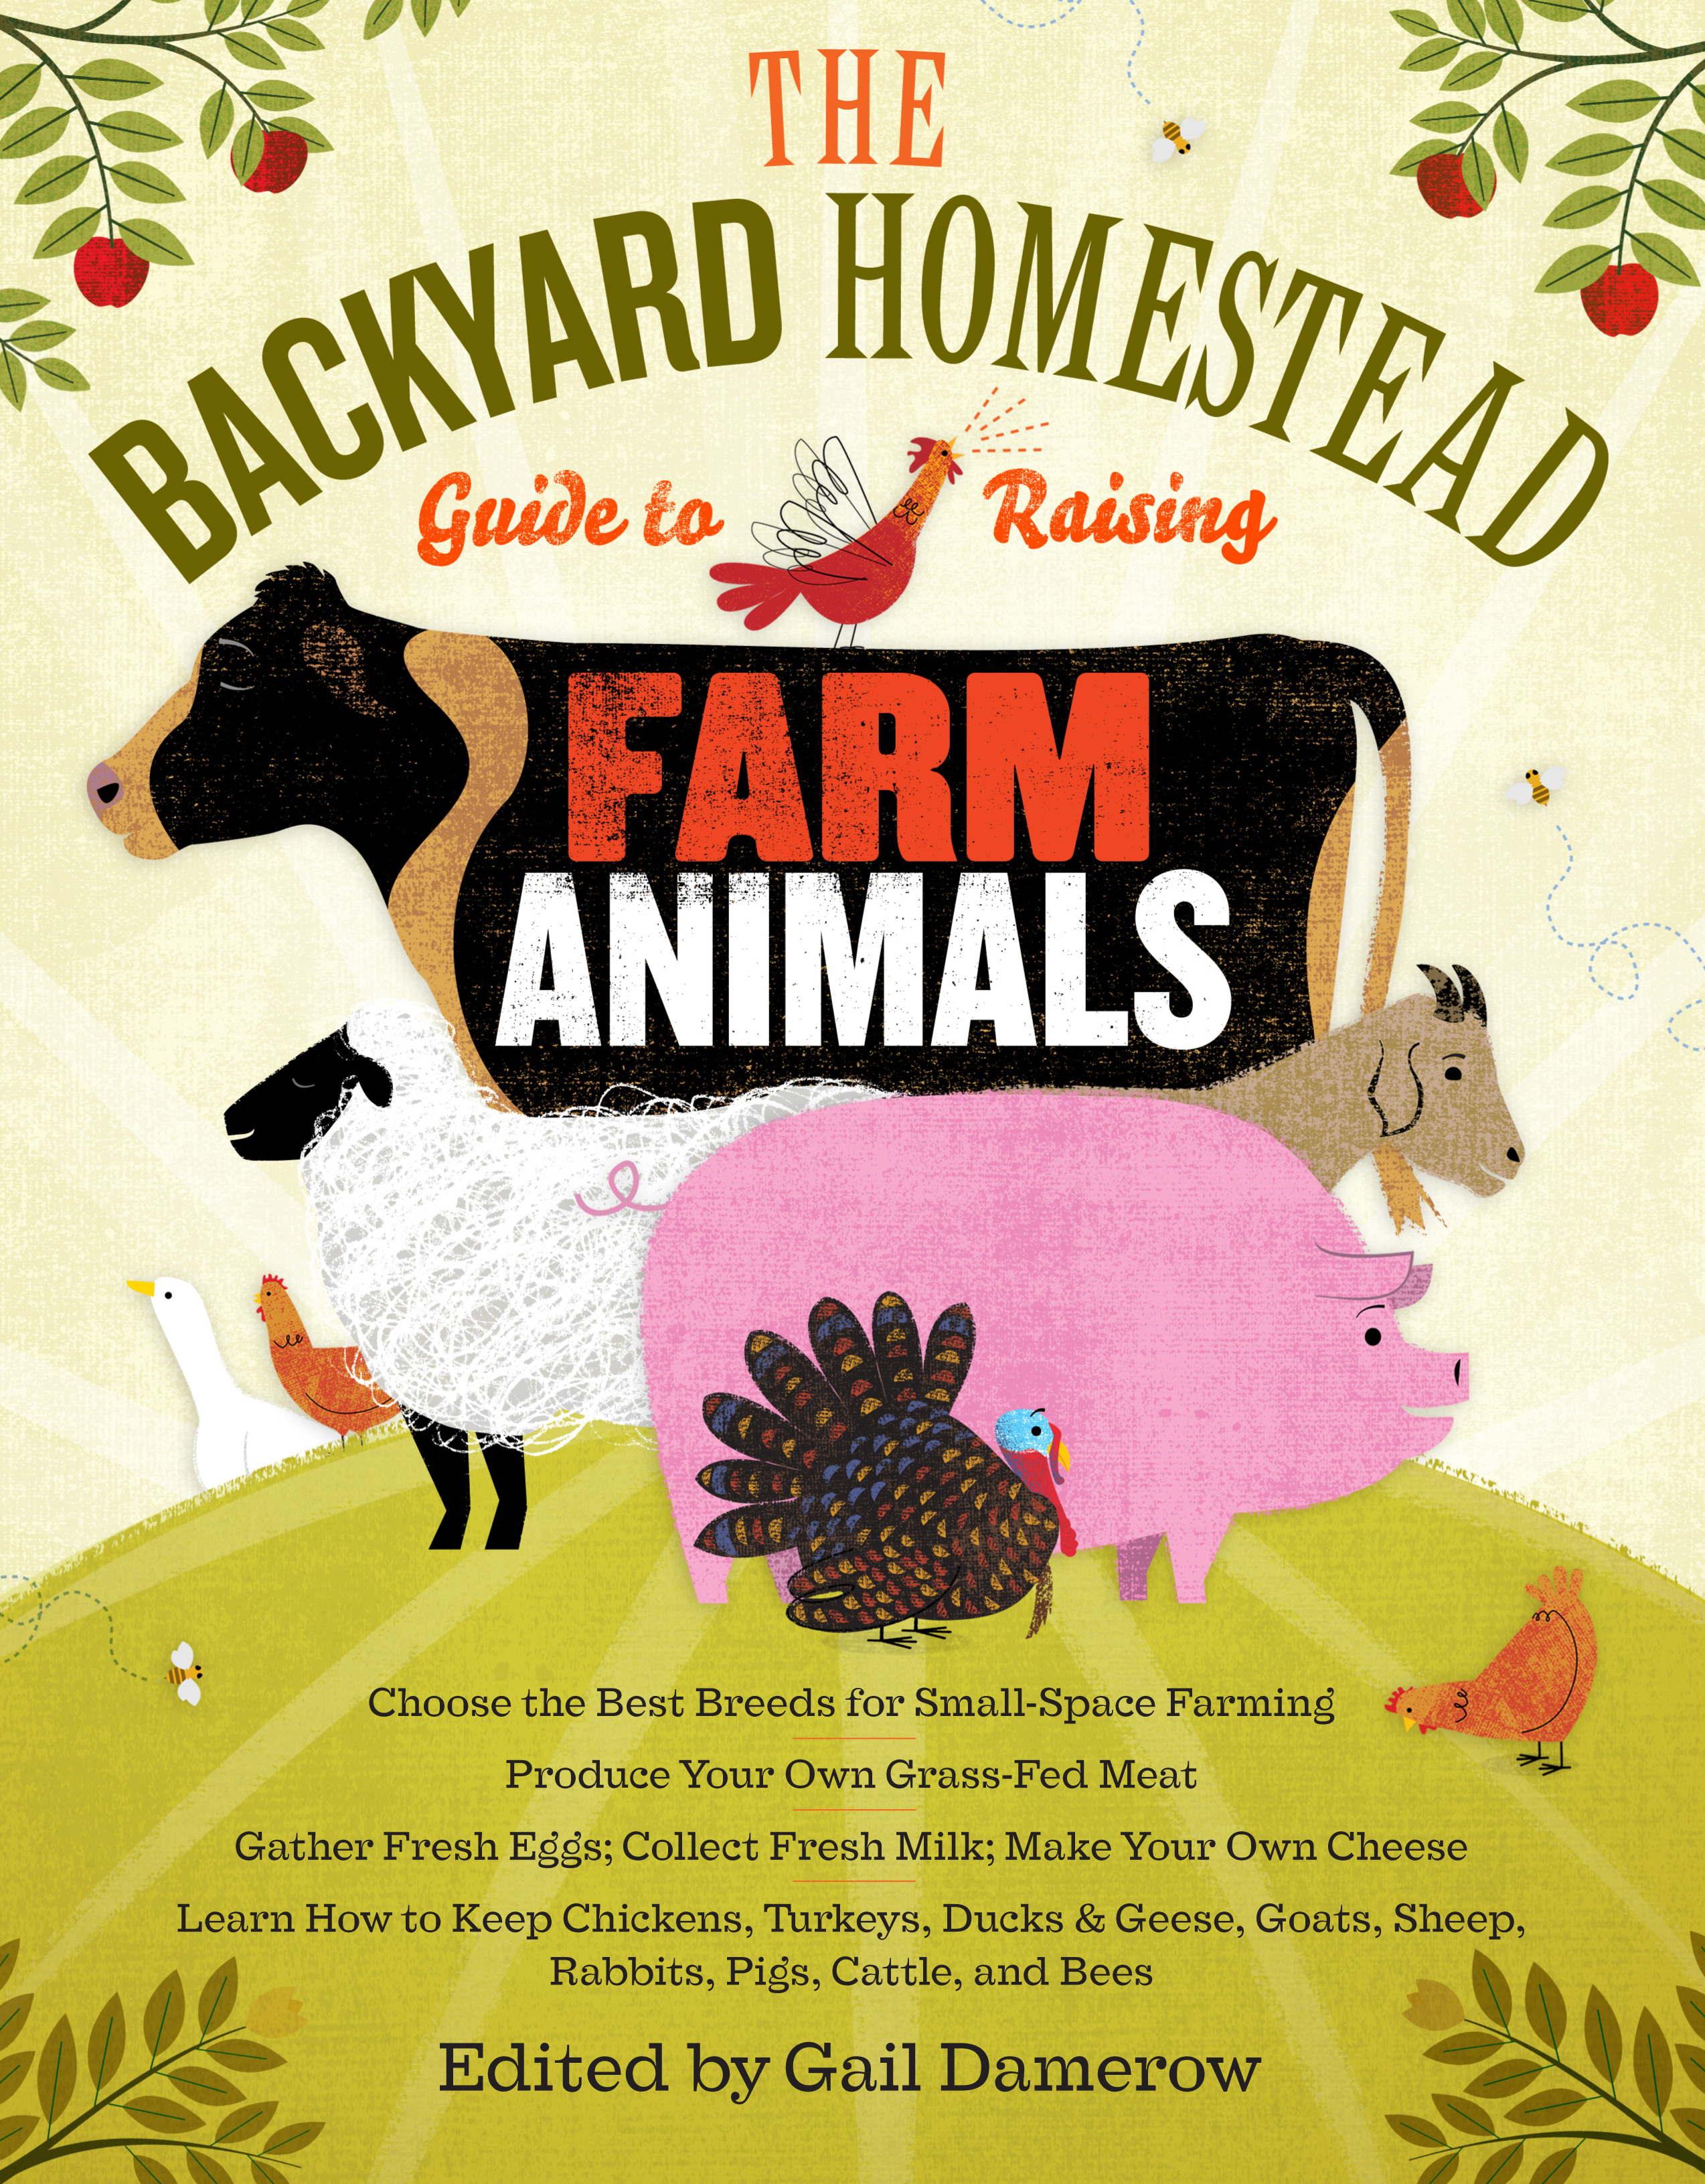 The Backyard Homestead Guide to Raising Farm Animals - Workman Publishing